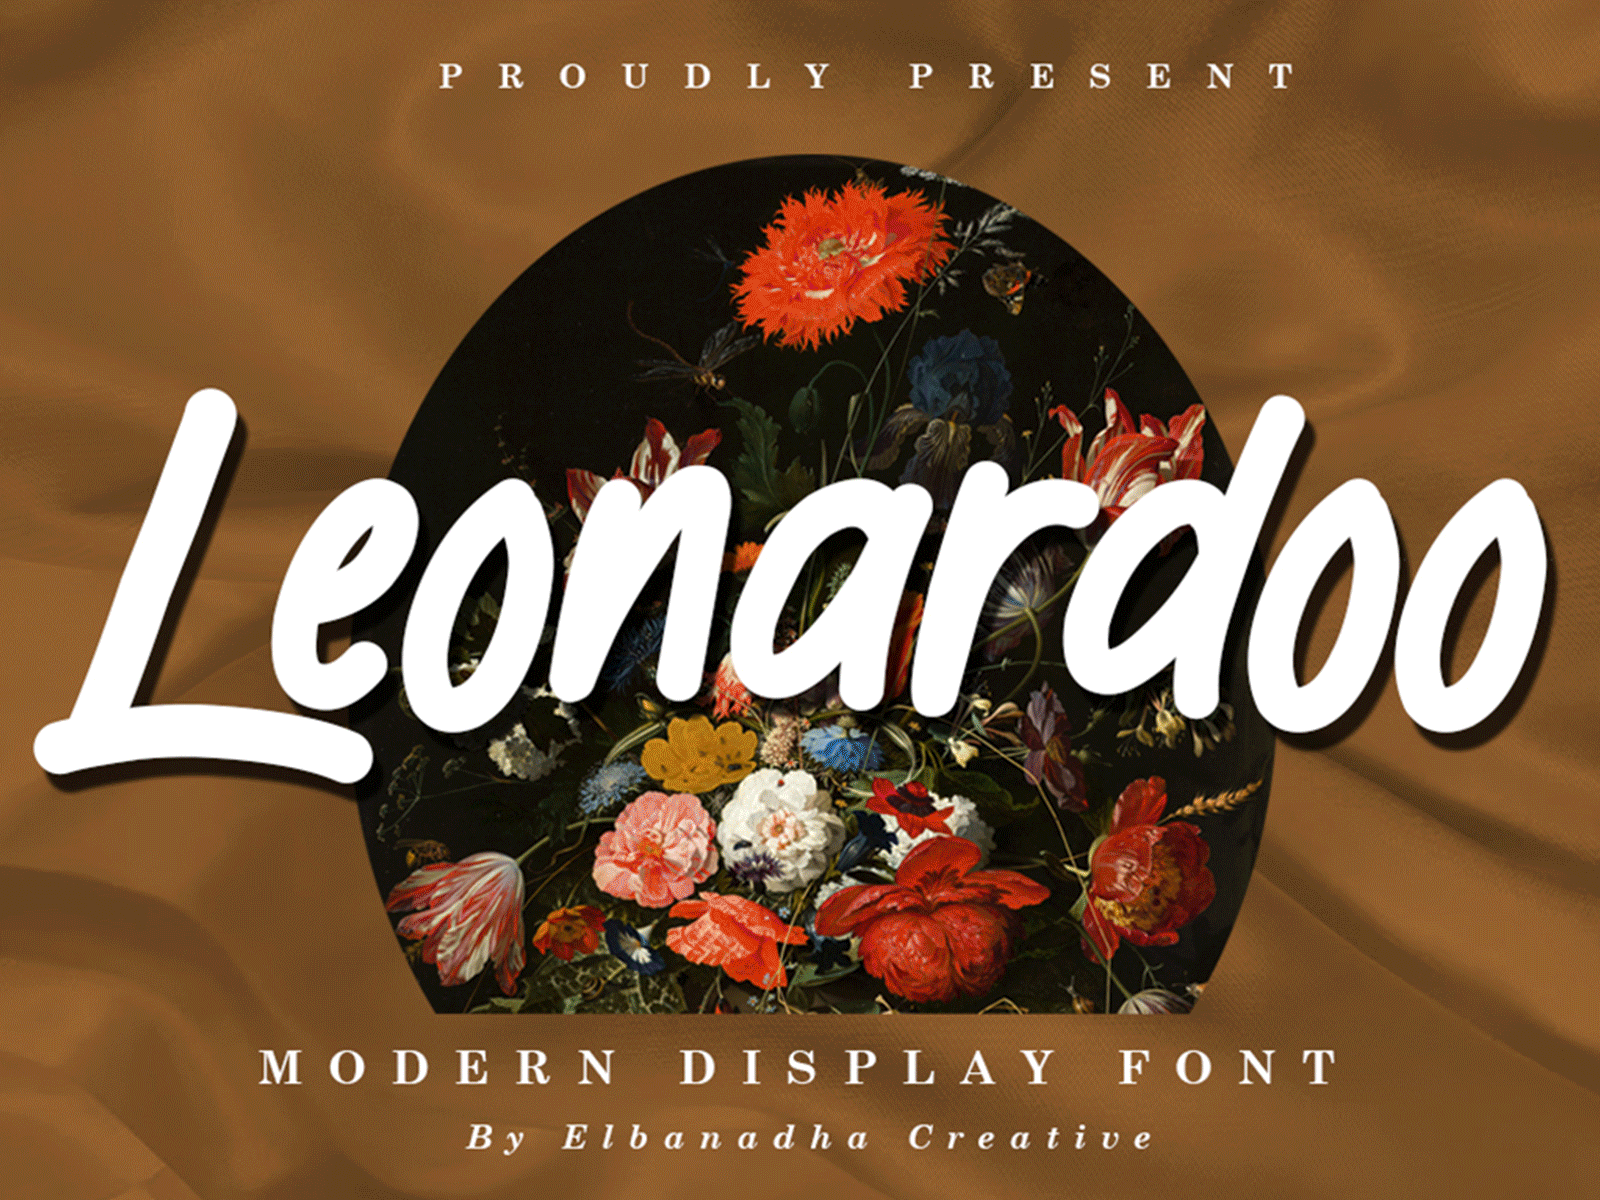 LEONARDOO | MODERN DISPLAY FONT